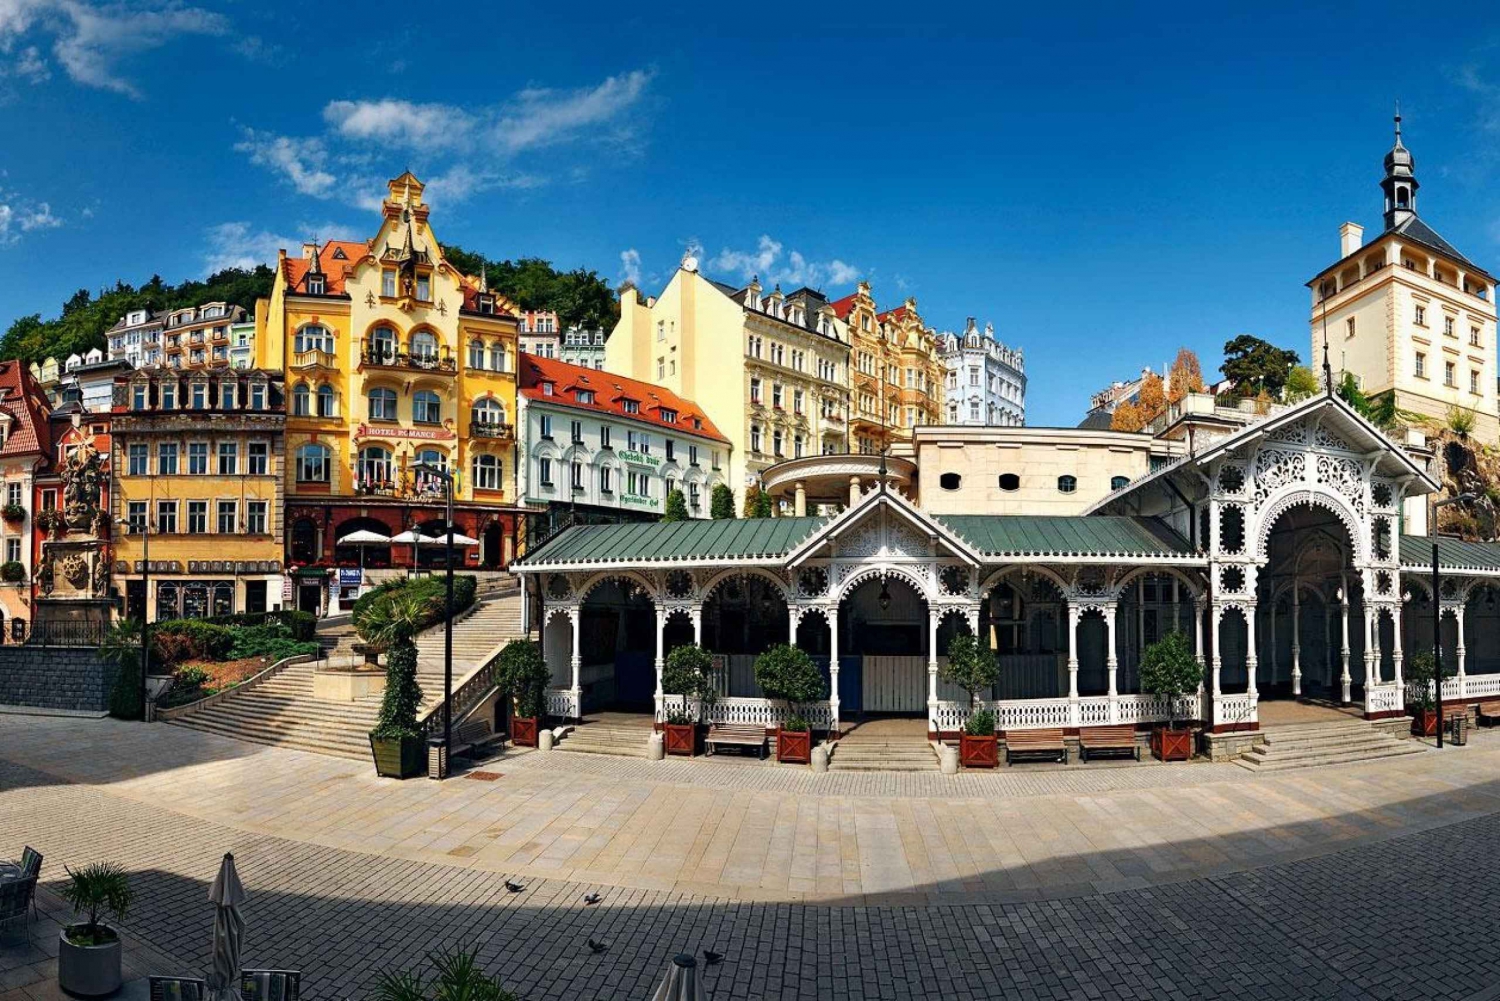 Full-Day Private Karlovy Vary Tour from Prague